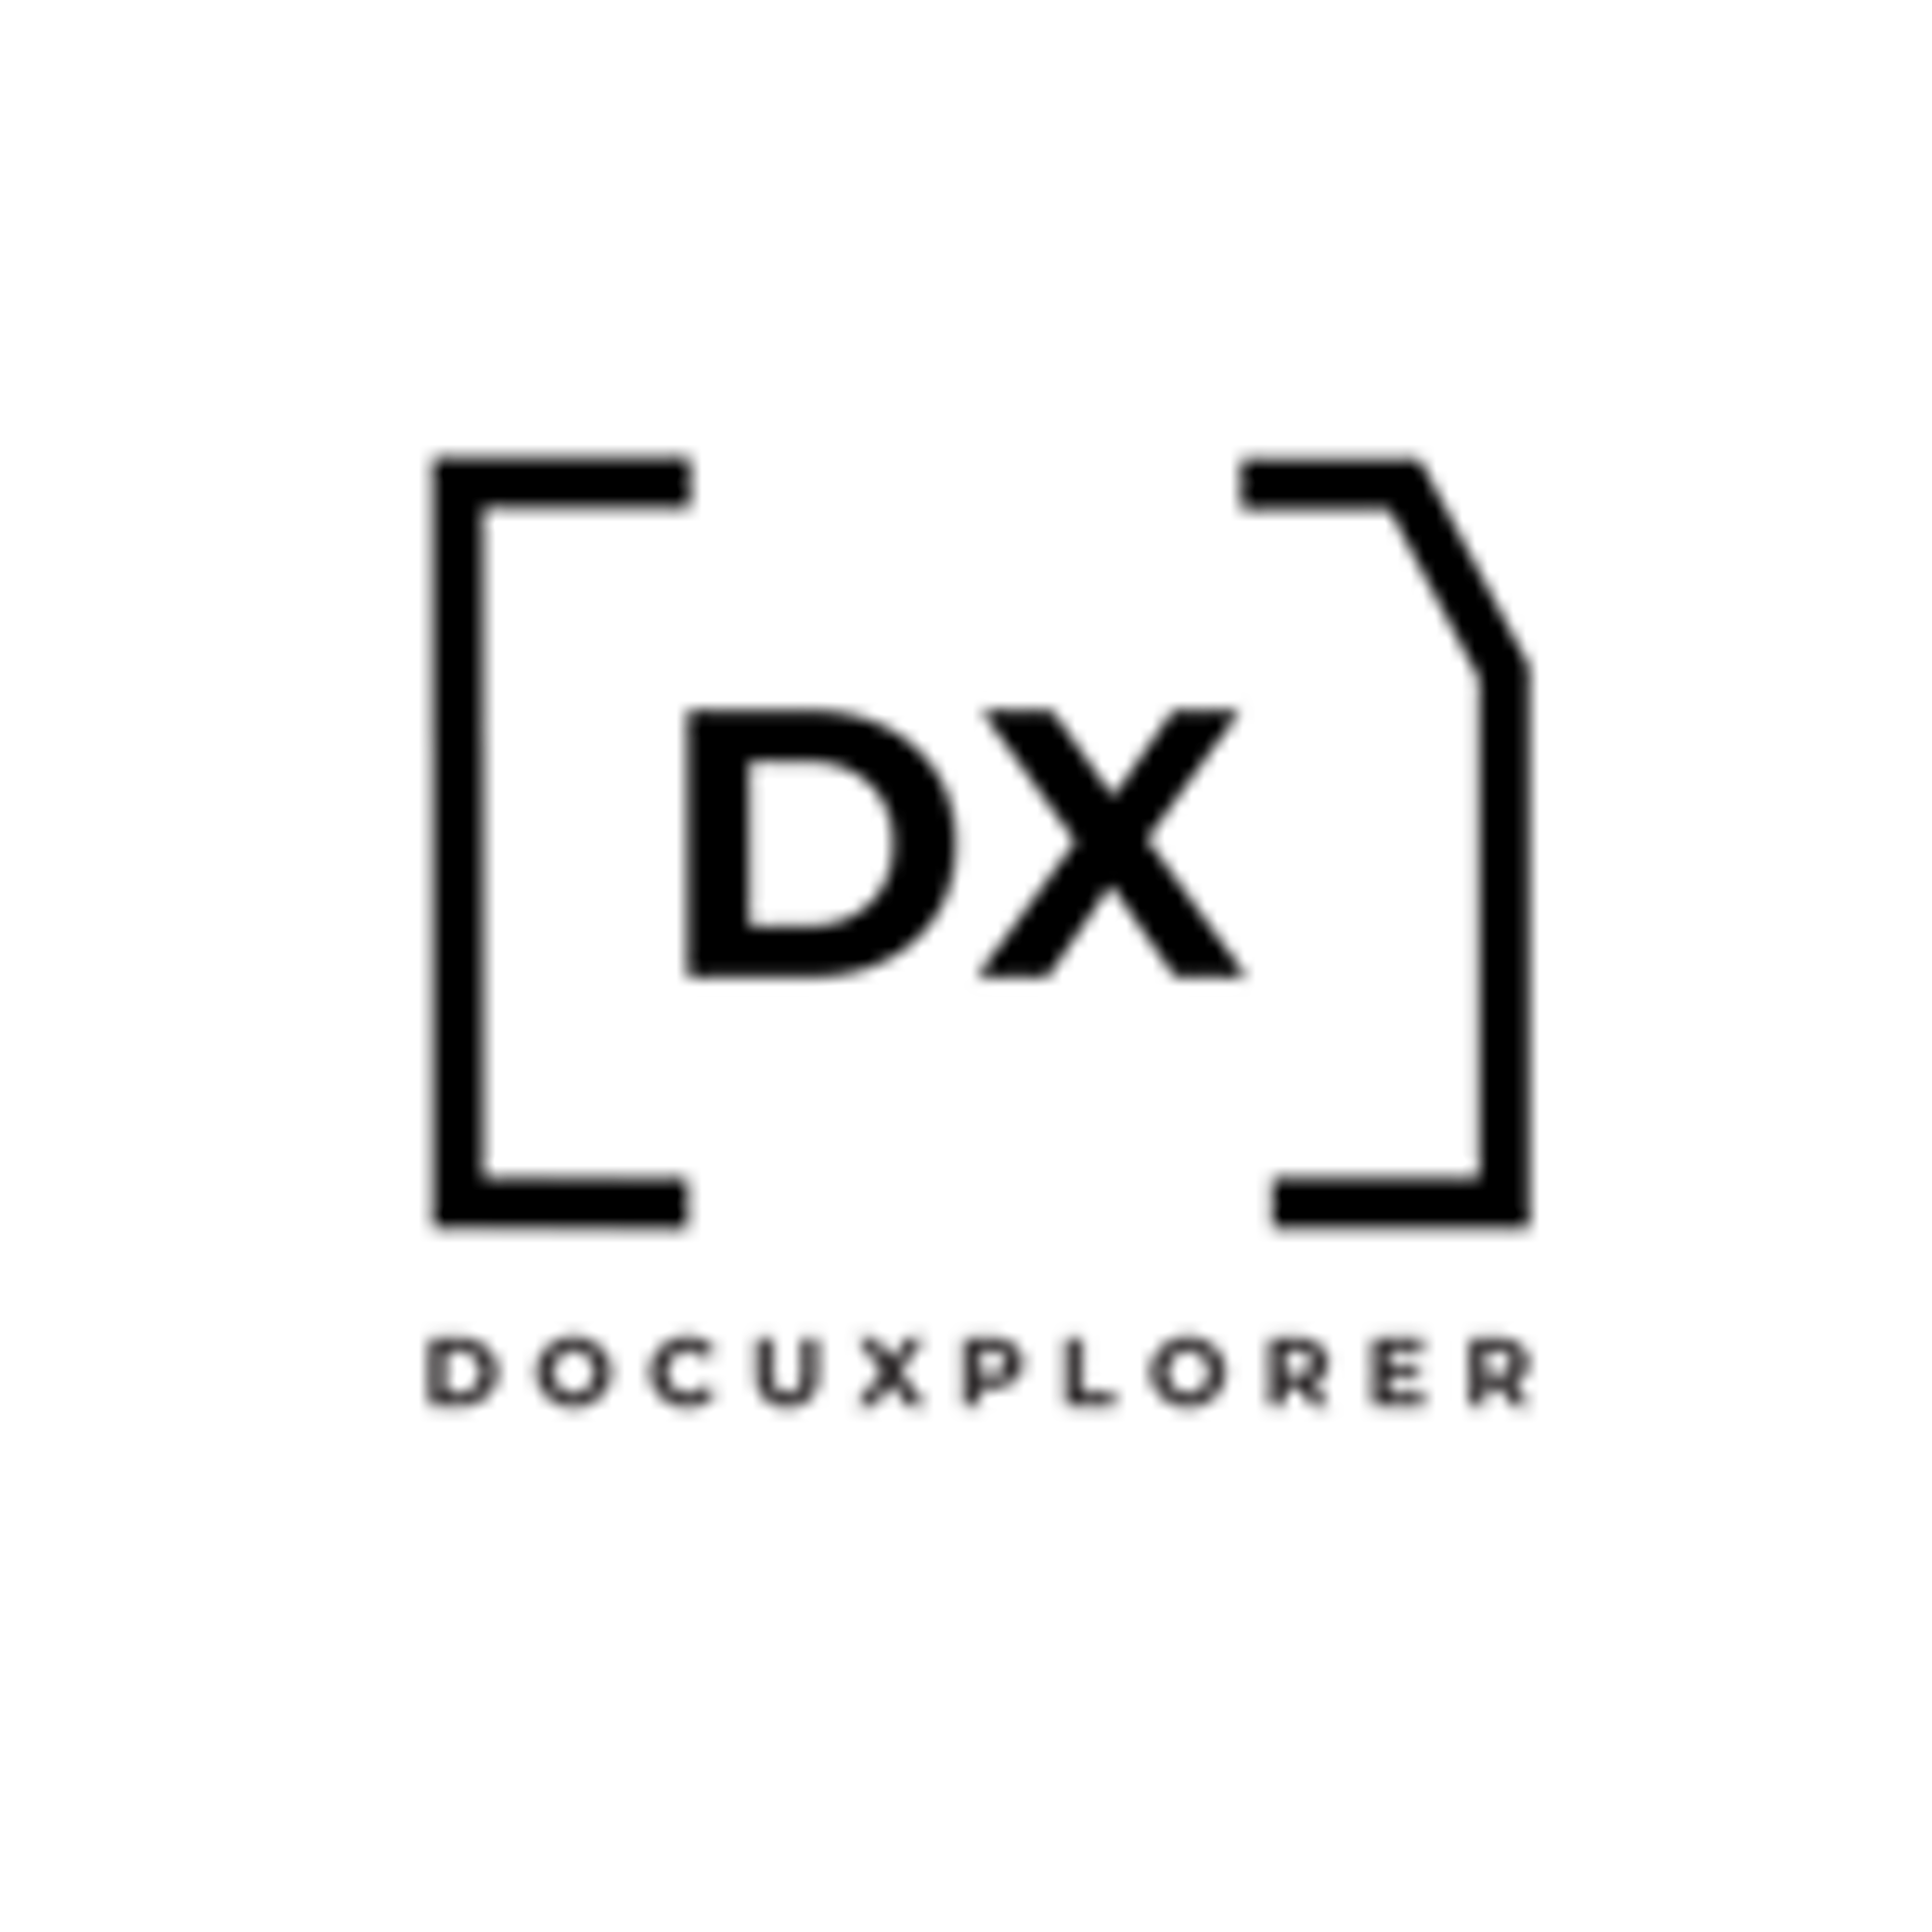 DocuXplorer Logo